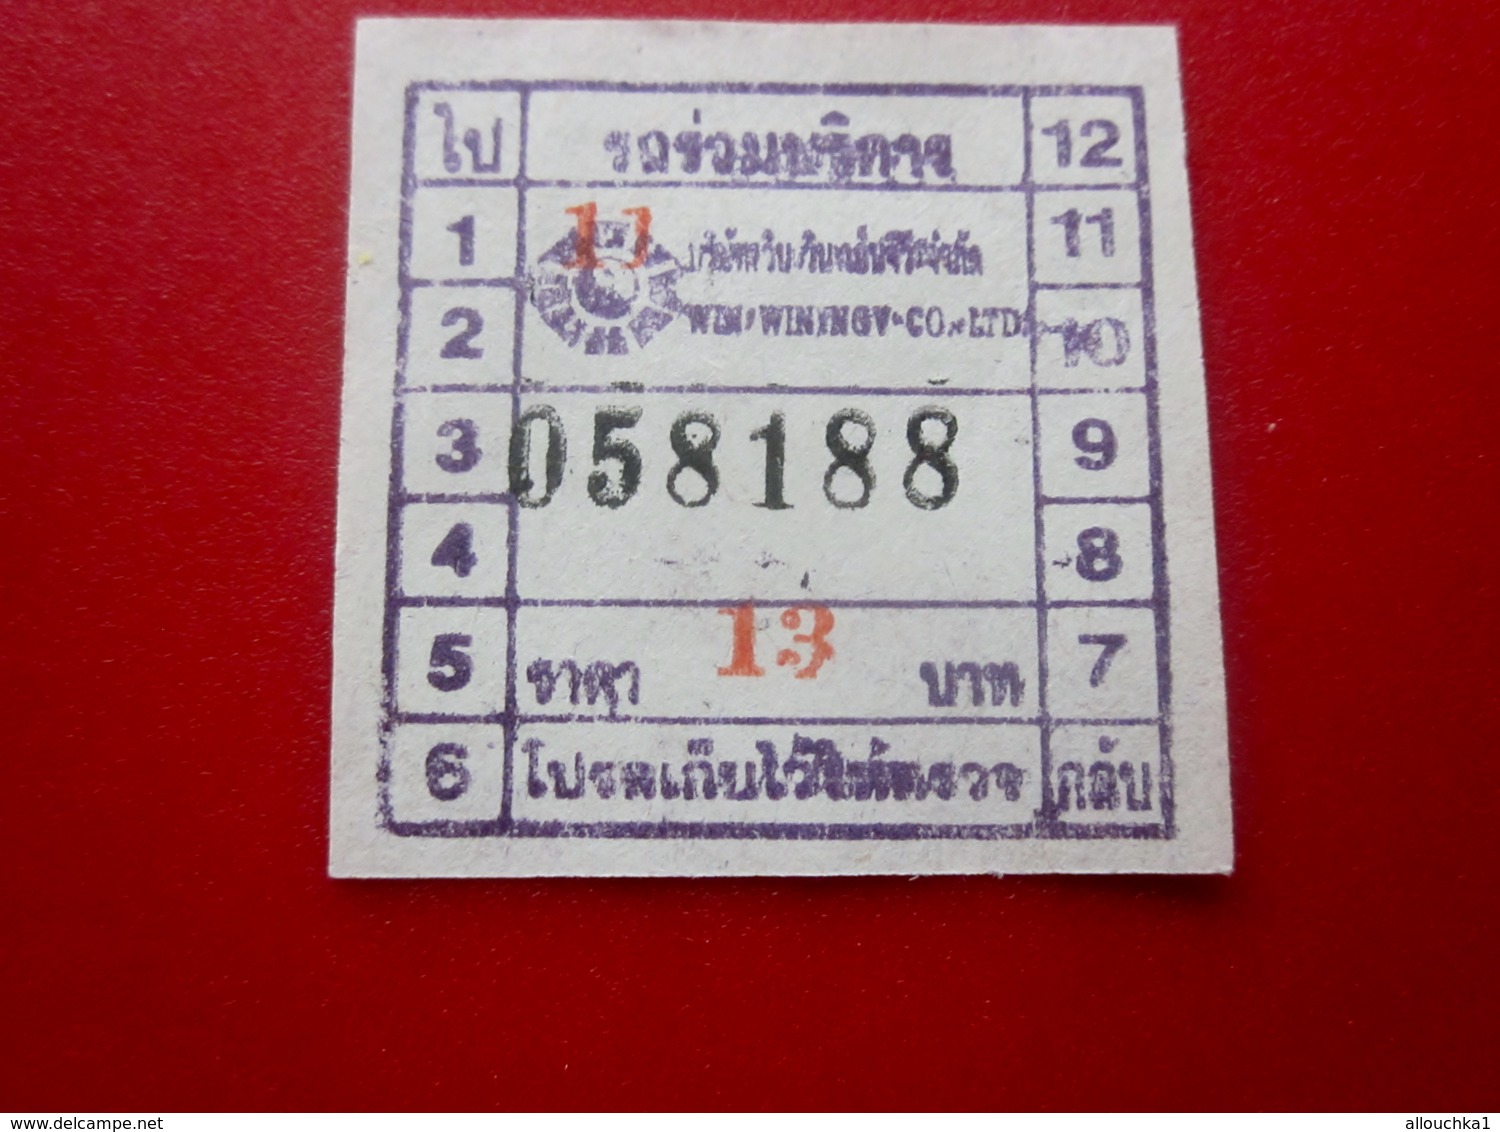 THAILAND THAILANDE -Boleto De Tren -Titre De Transport Billet Ticket-Tramway,Bus,Autobus,Railway,Métro - Mundo